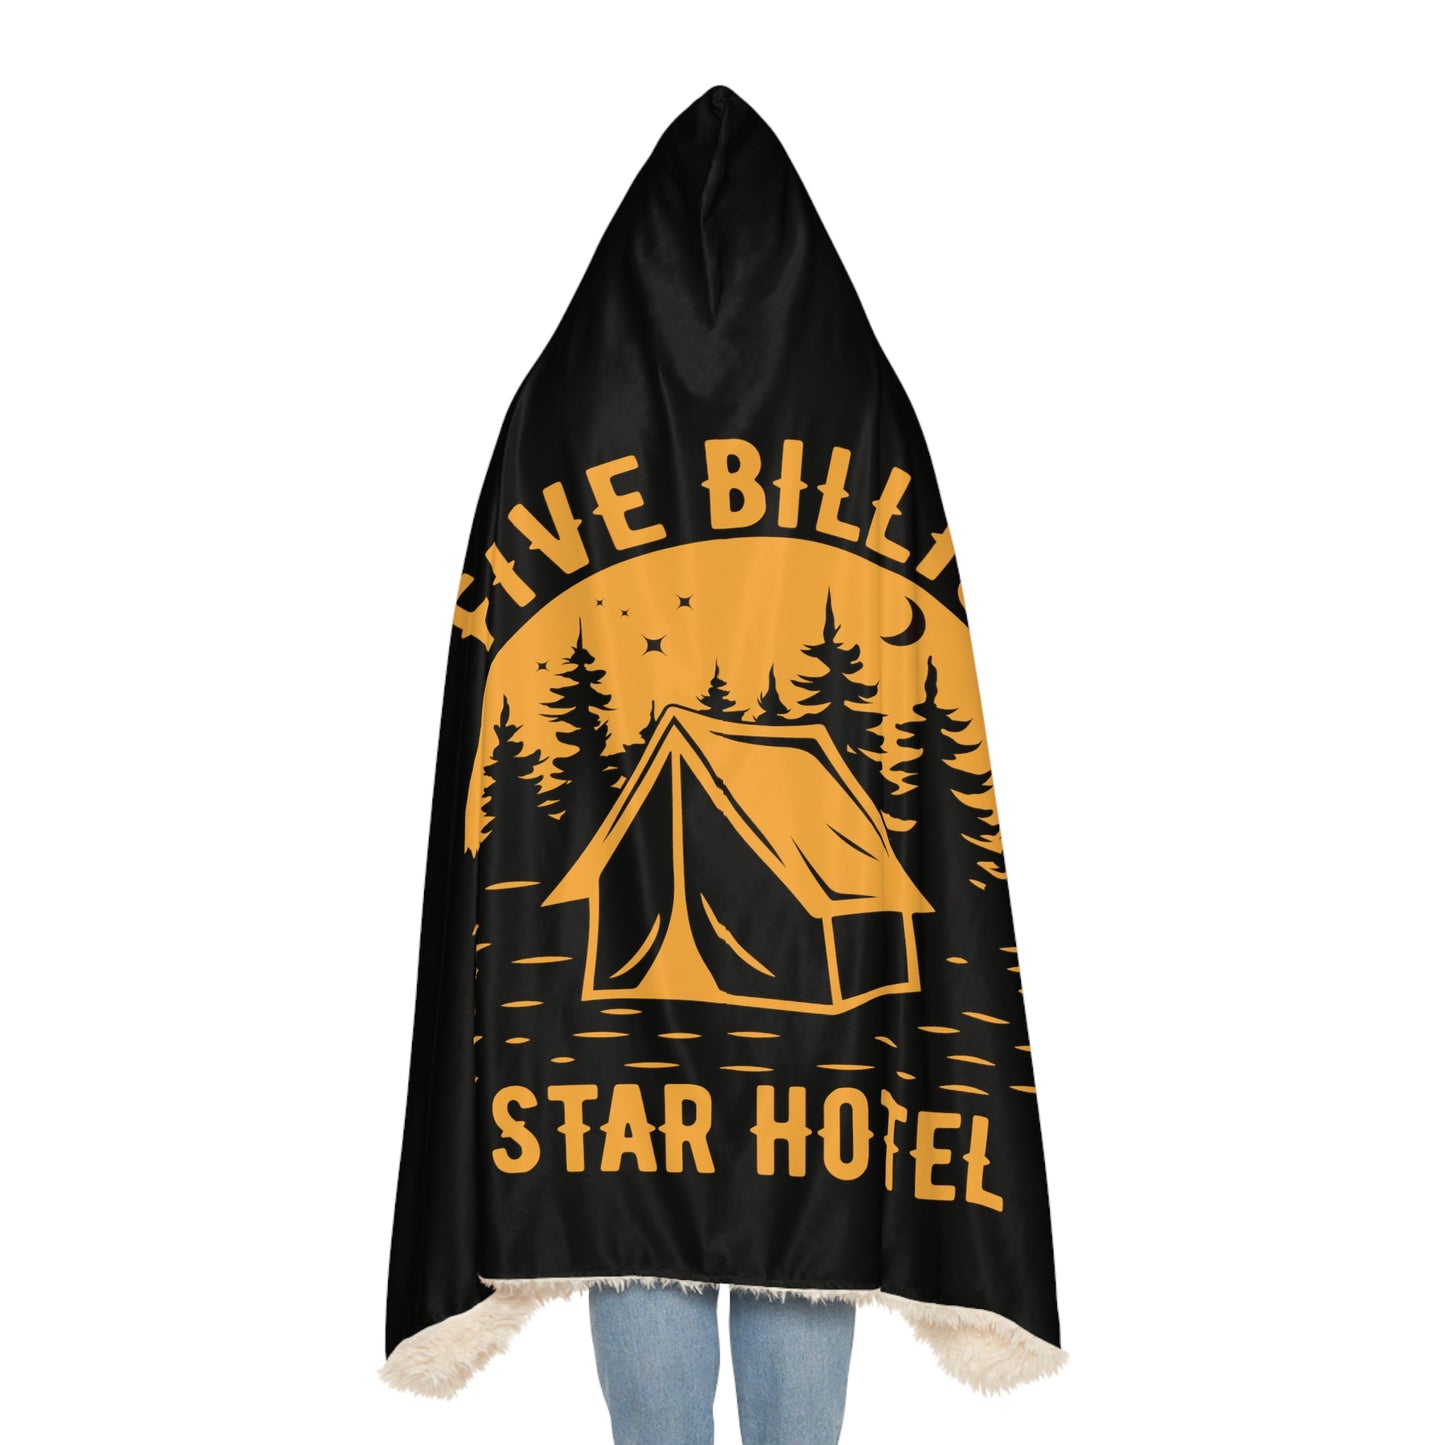 5 Billion Star Hotel Outdoor Snuggly Hooded Blanket